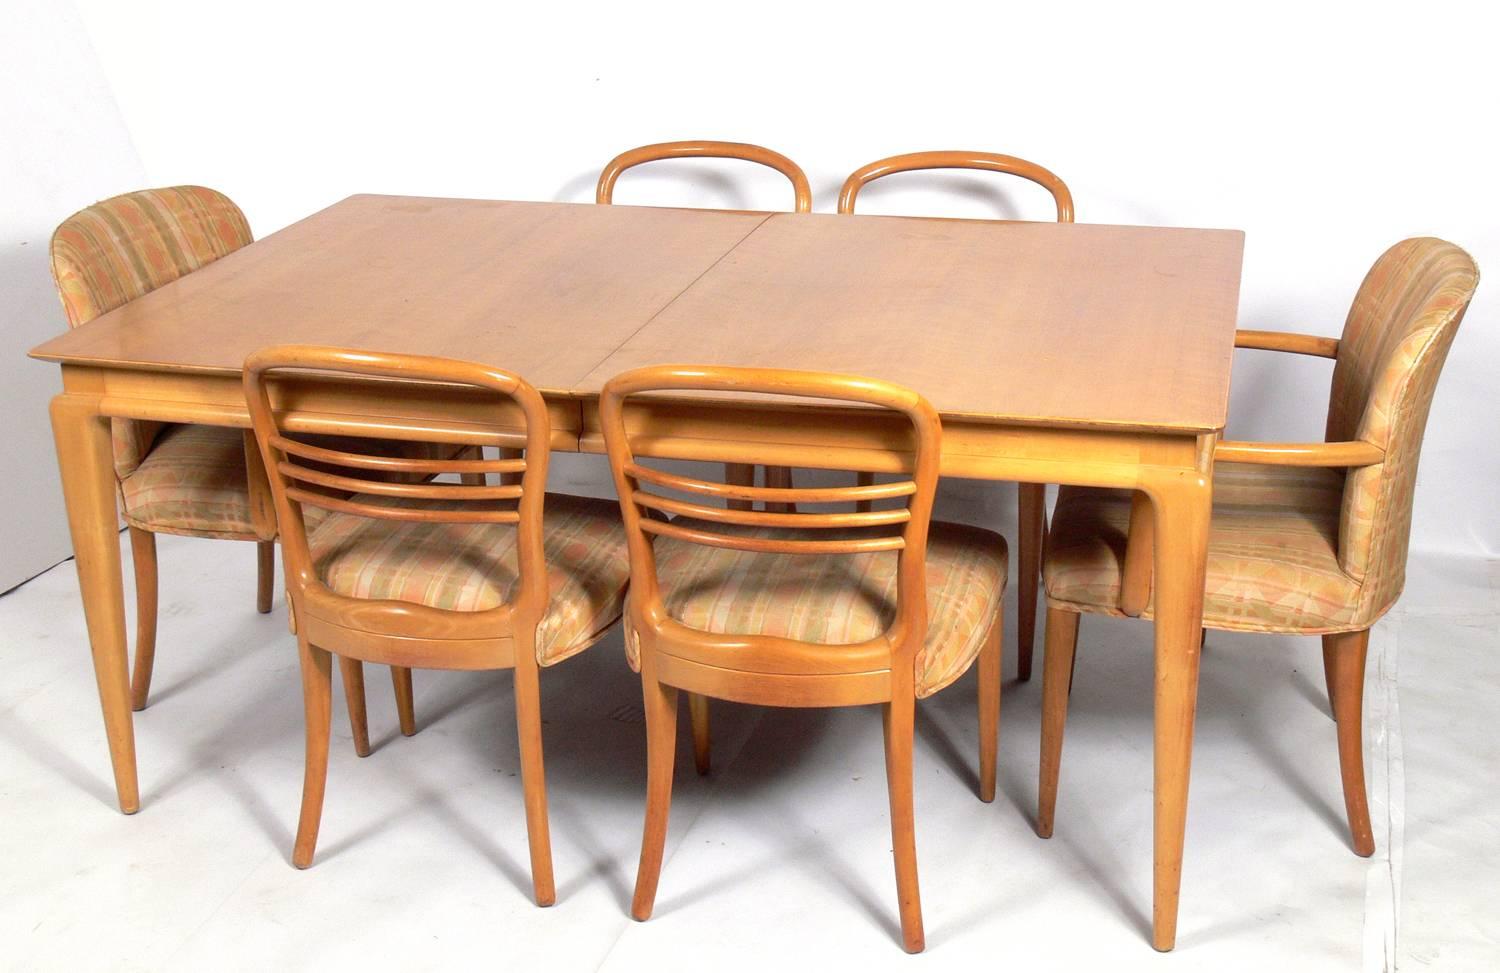 Mid-20th Century Swedish Mid-Century Modern Dining Table